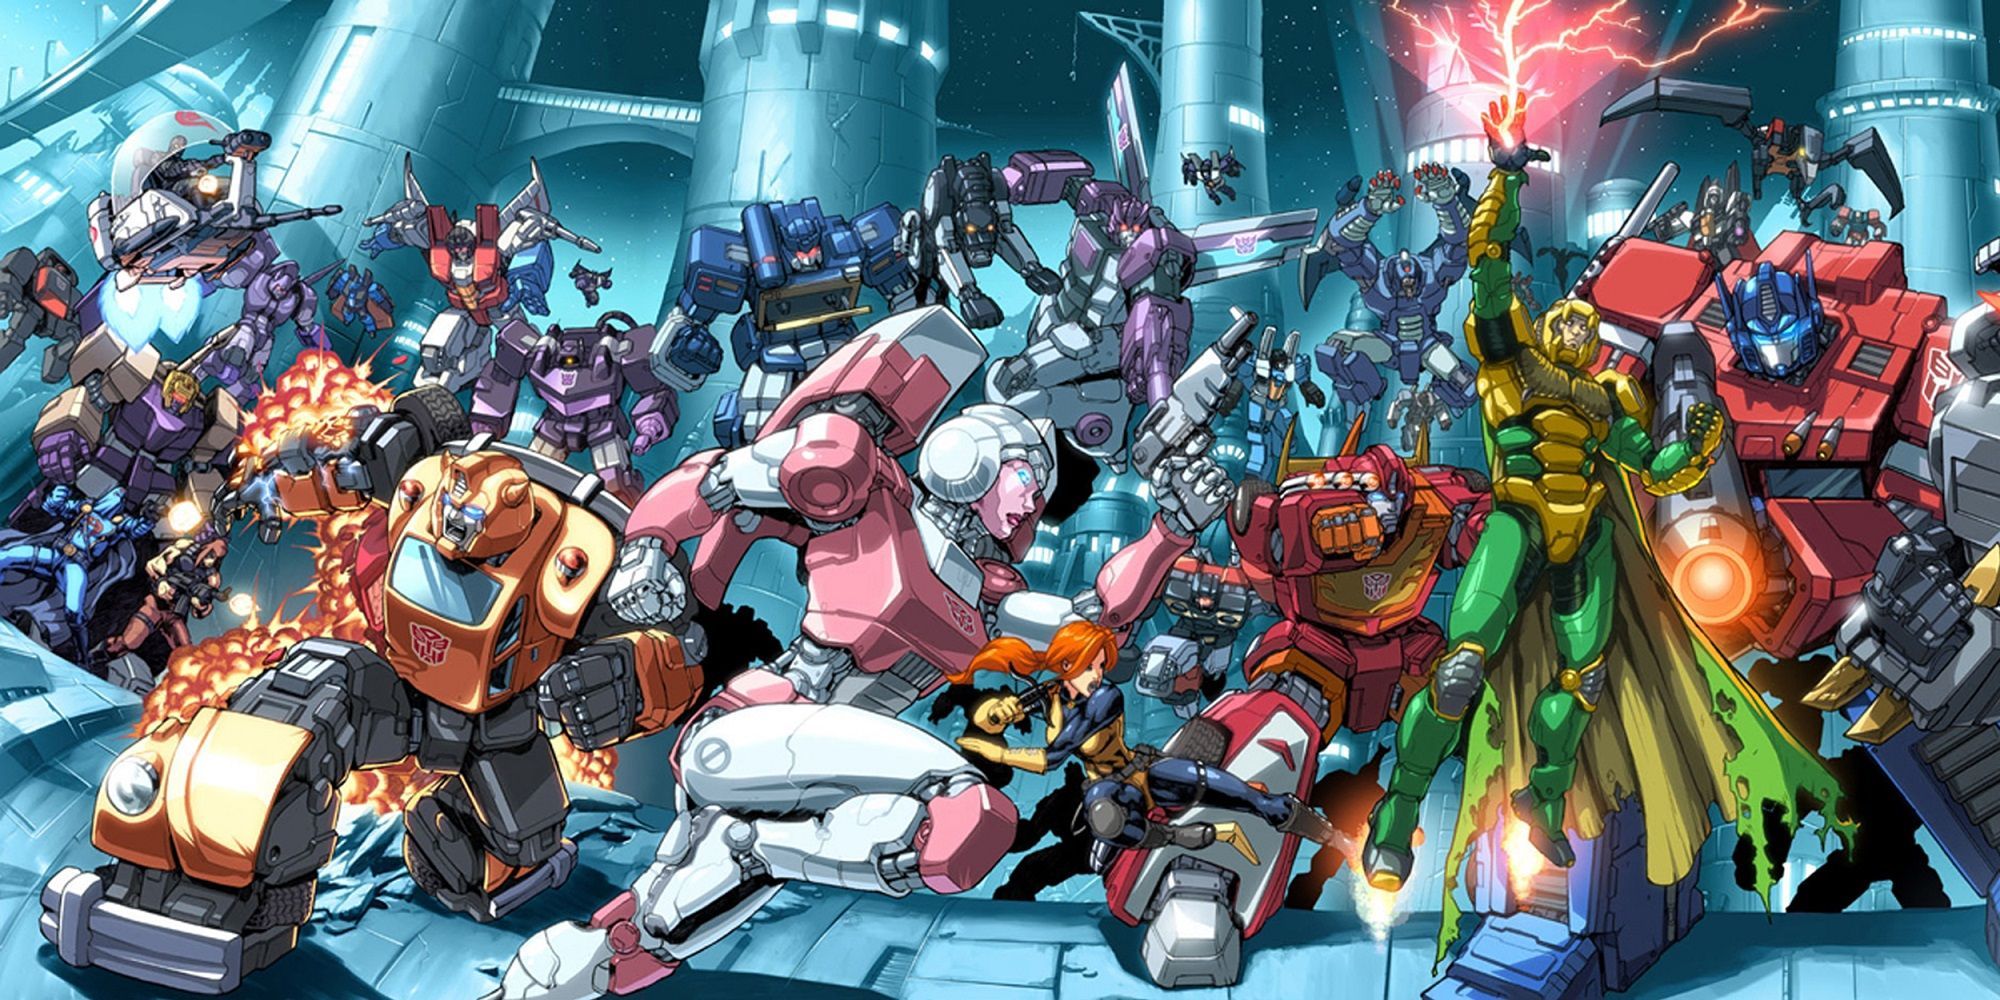 Cobra GI Joe Decepticons Autobots Transformers all facing each other in the comics